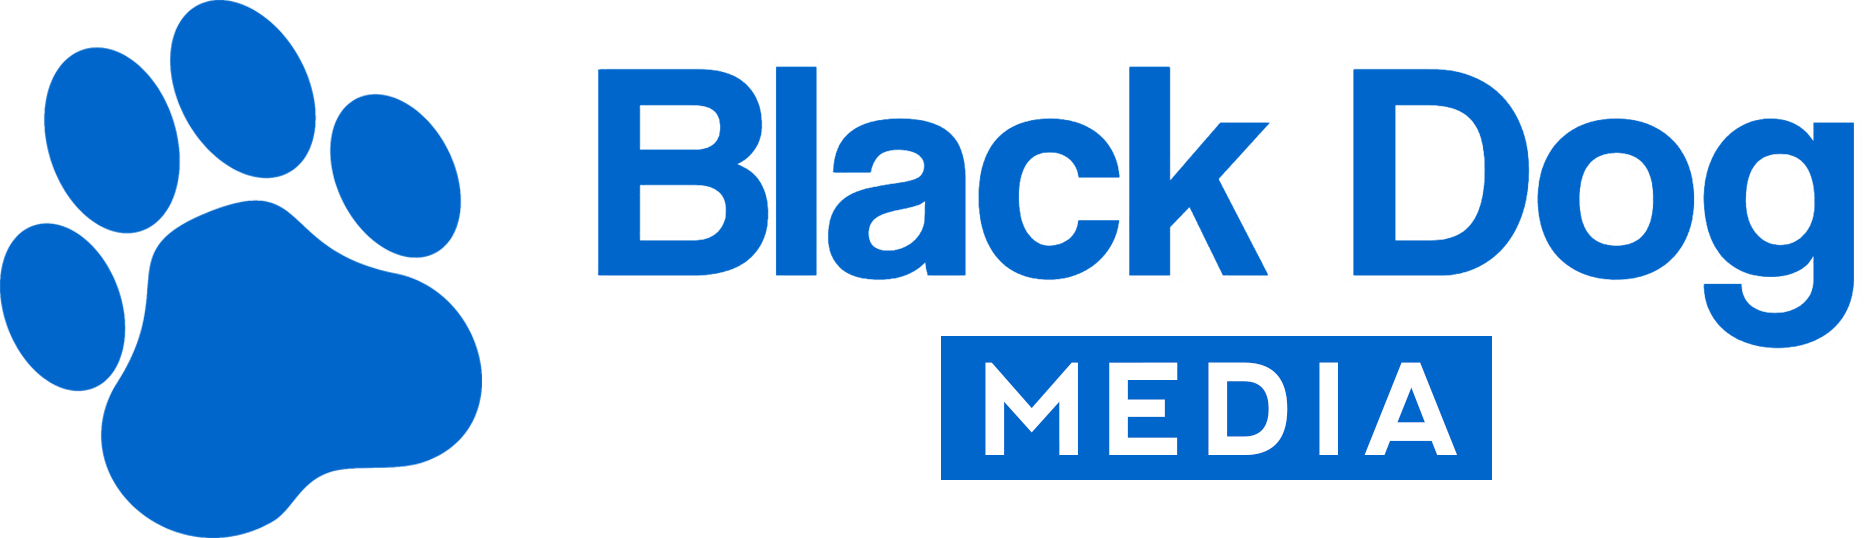 Black Dog Media